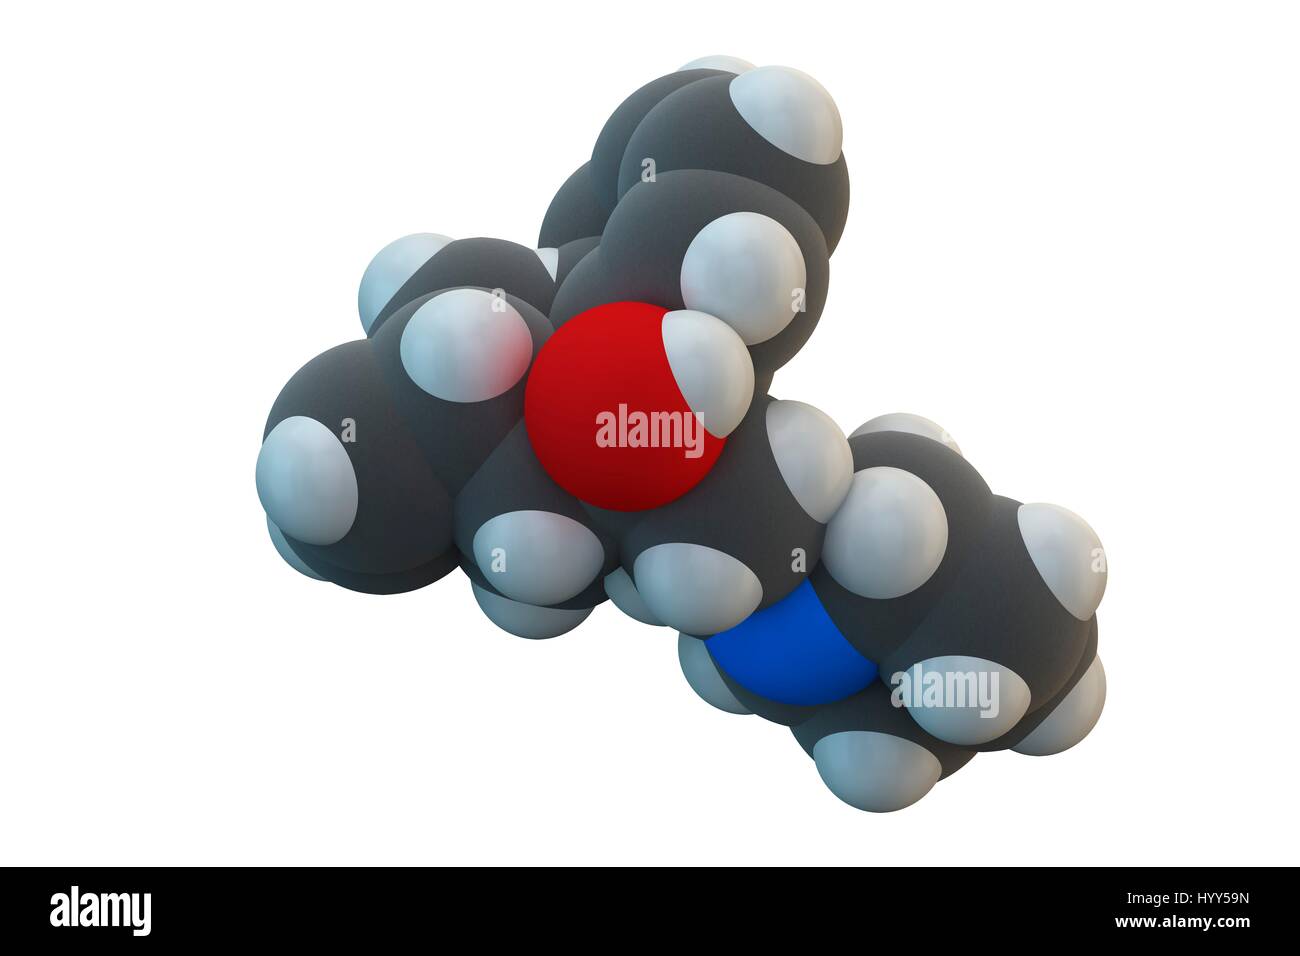 Biperiden Parkinson's disease drug molecule. Chemical formula is C21H29NO. Atoms are represented as spheres: carbon (grey), hydrogen (white), nitrogen (blue), oxygen (red). Illustration. Stock Photo